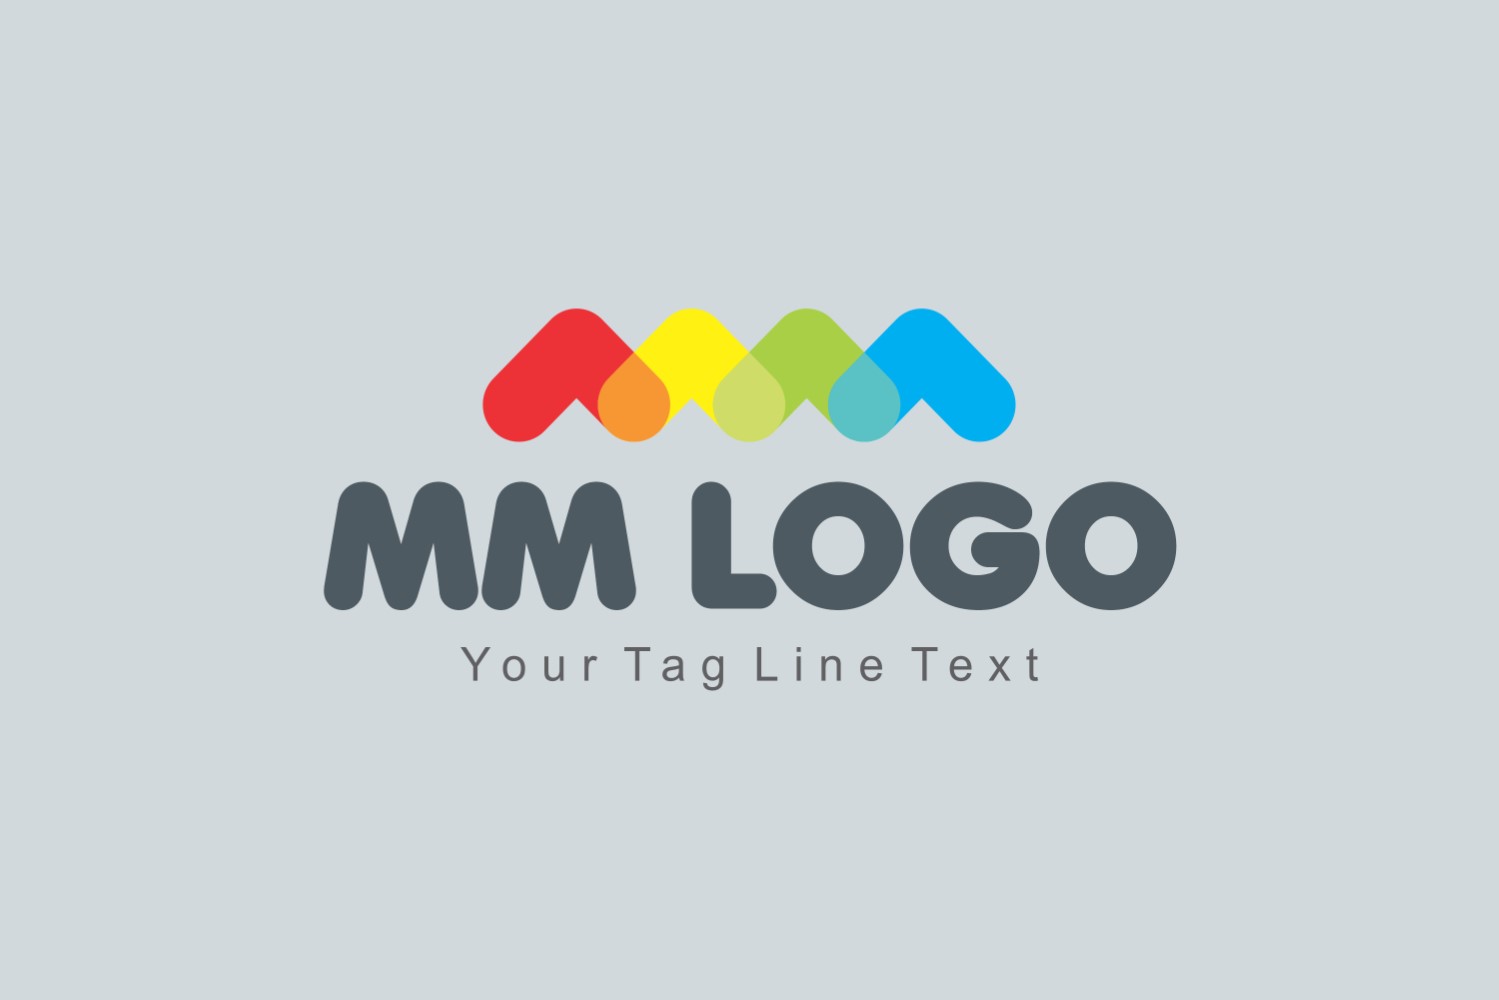 MM logo Logo Design Template